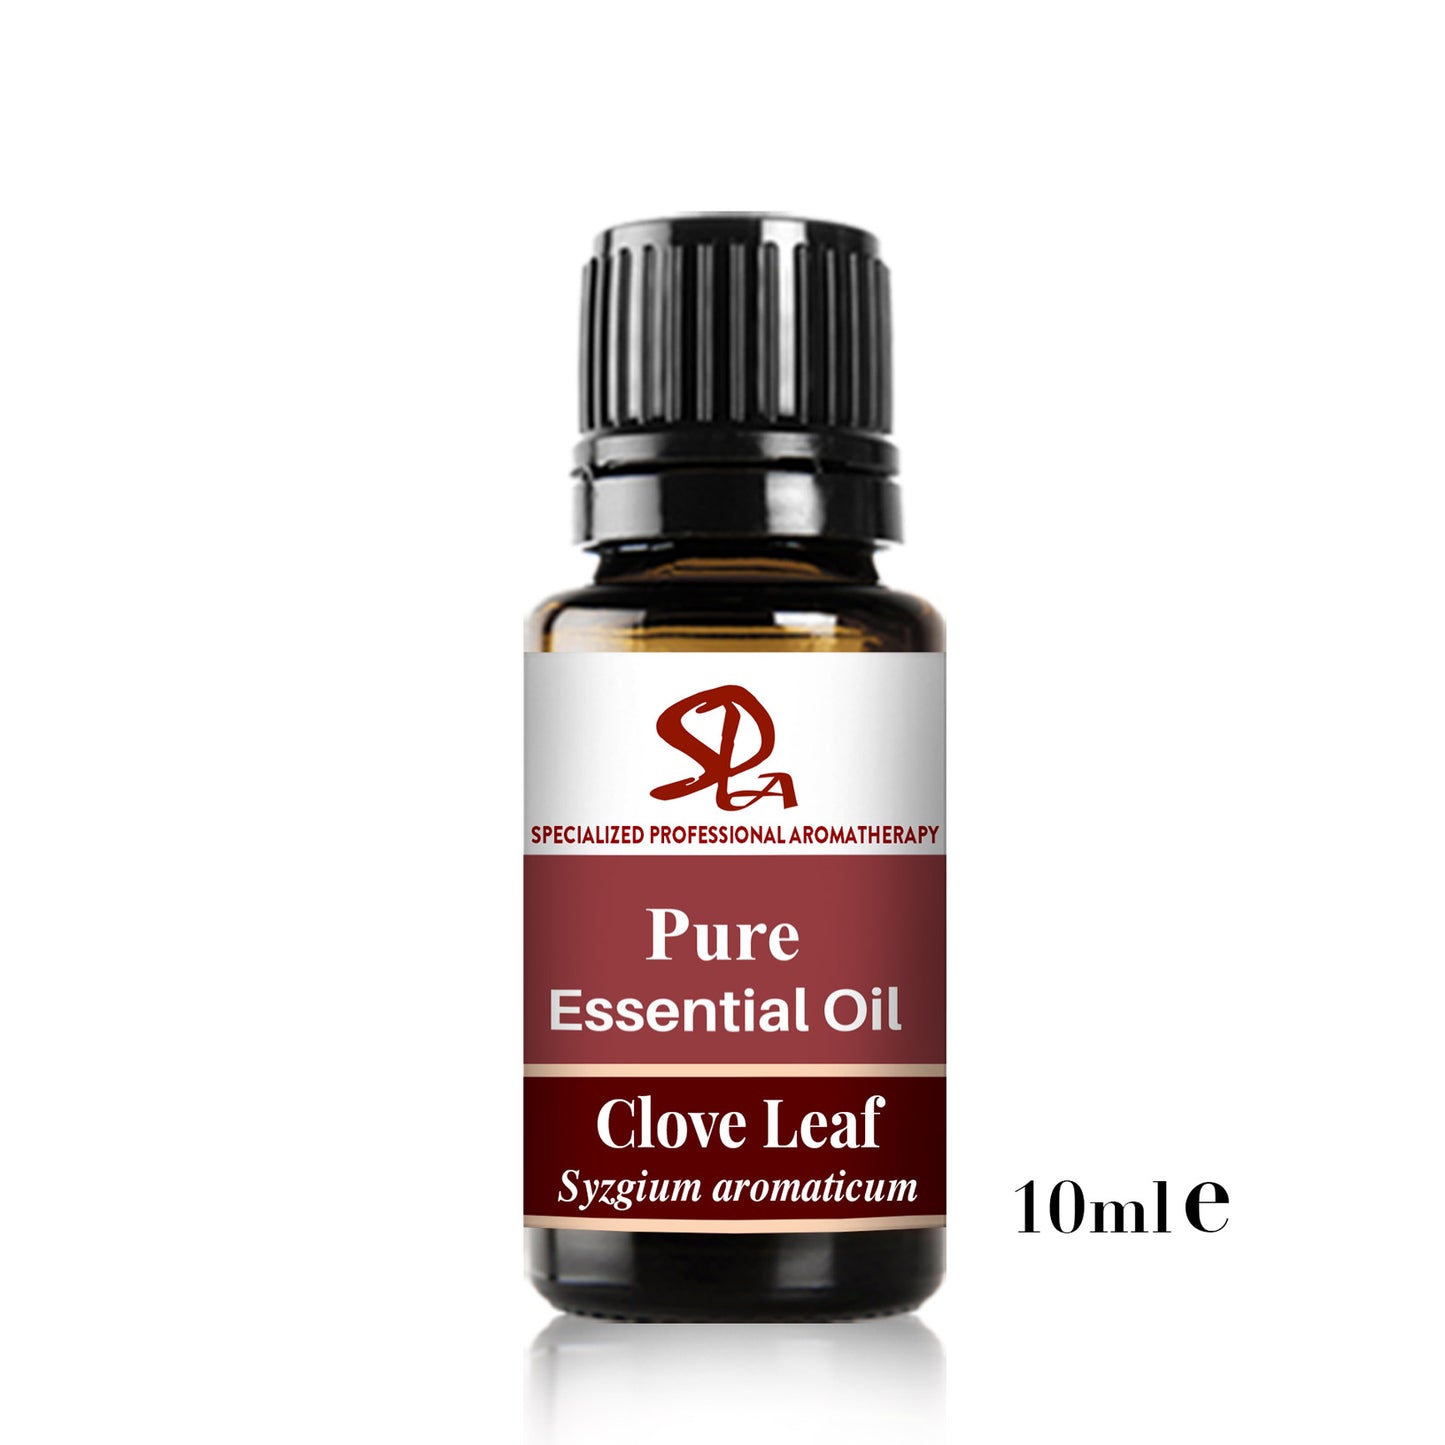 Clove Leaf Essential Oil